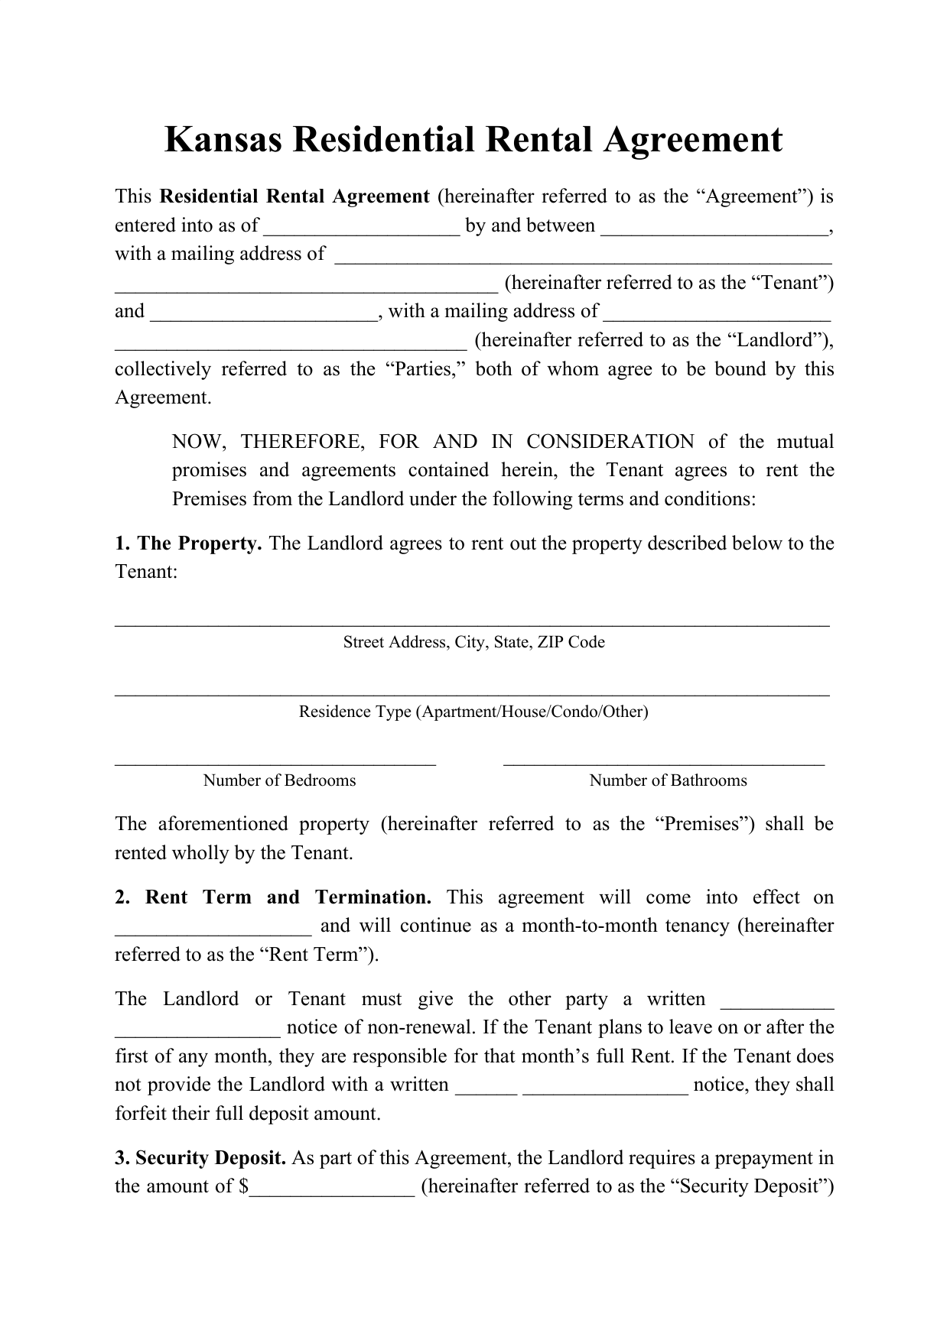 Residential Rental Agreement Template - Kansas, Page 1